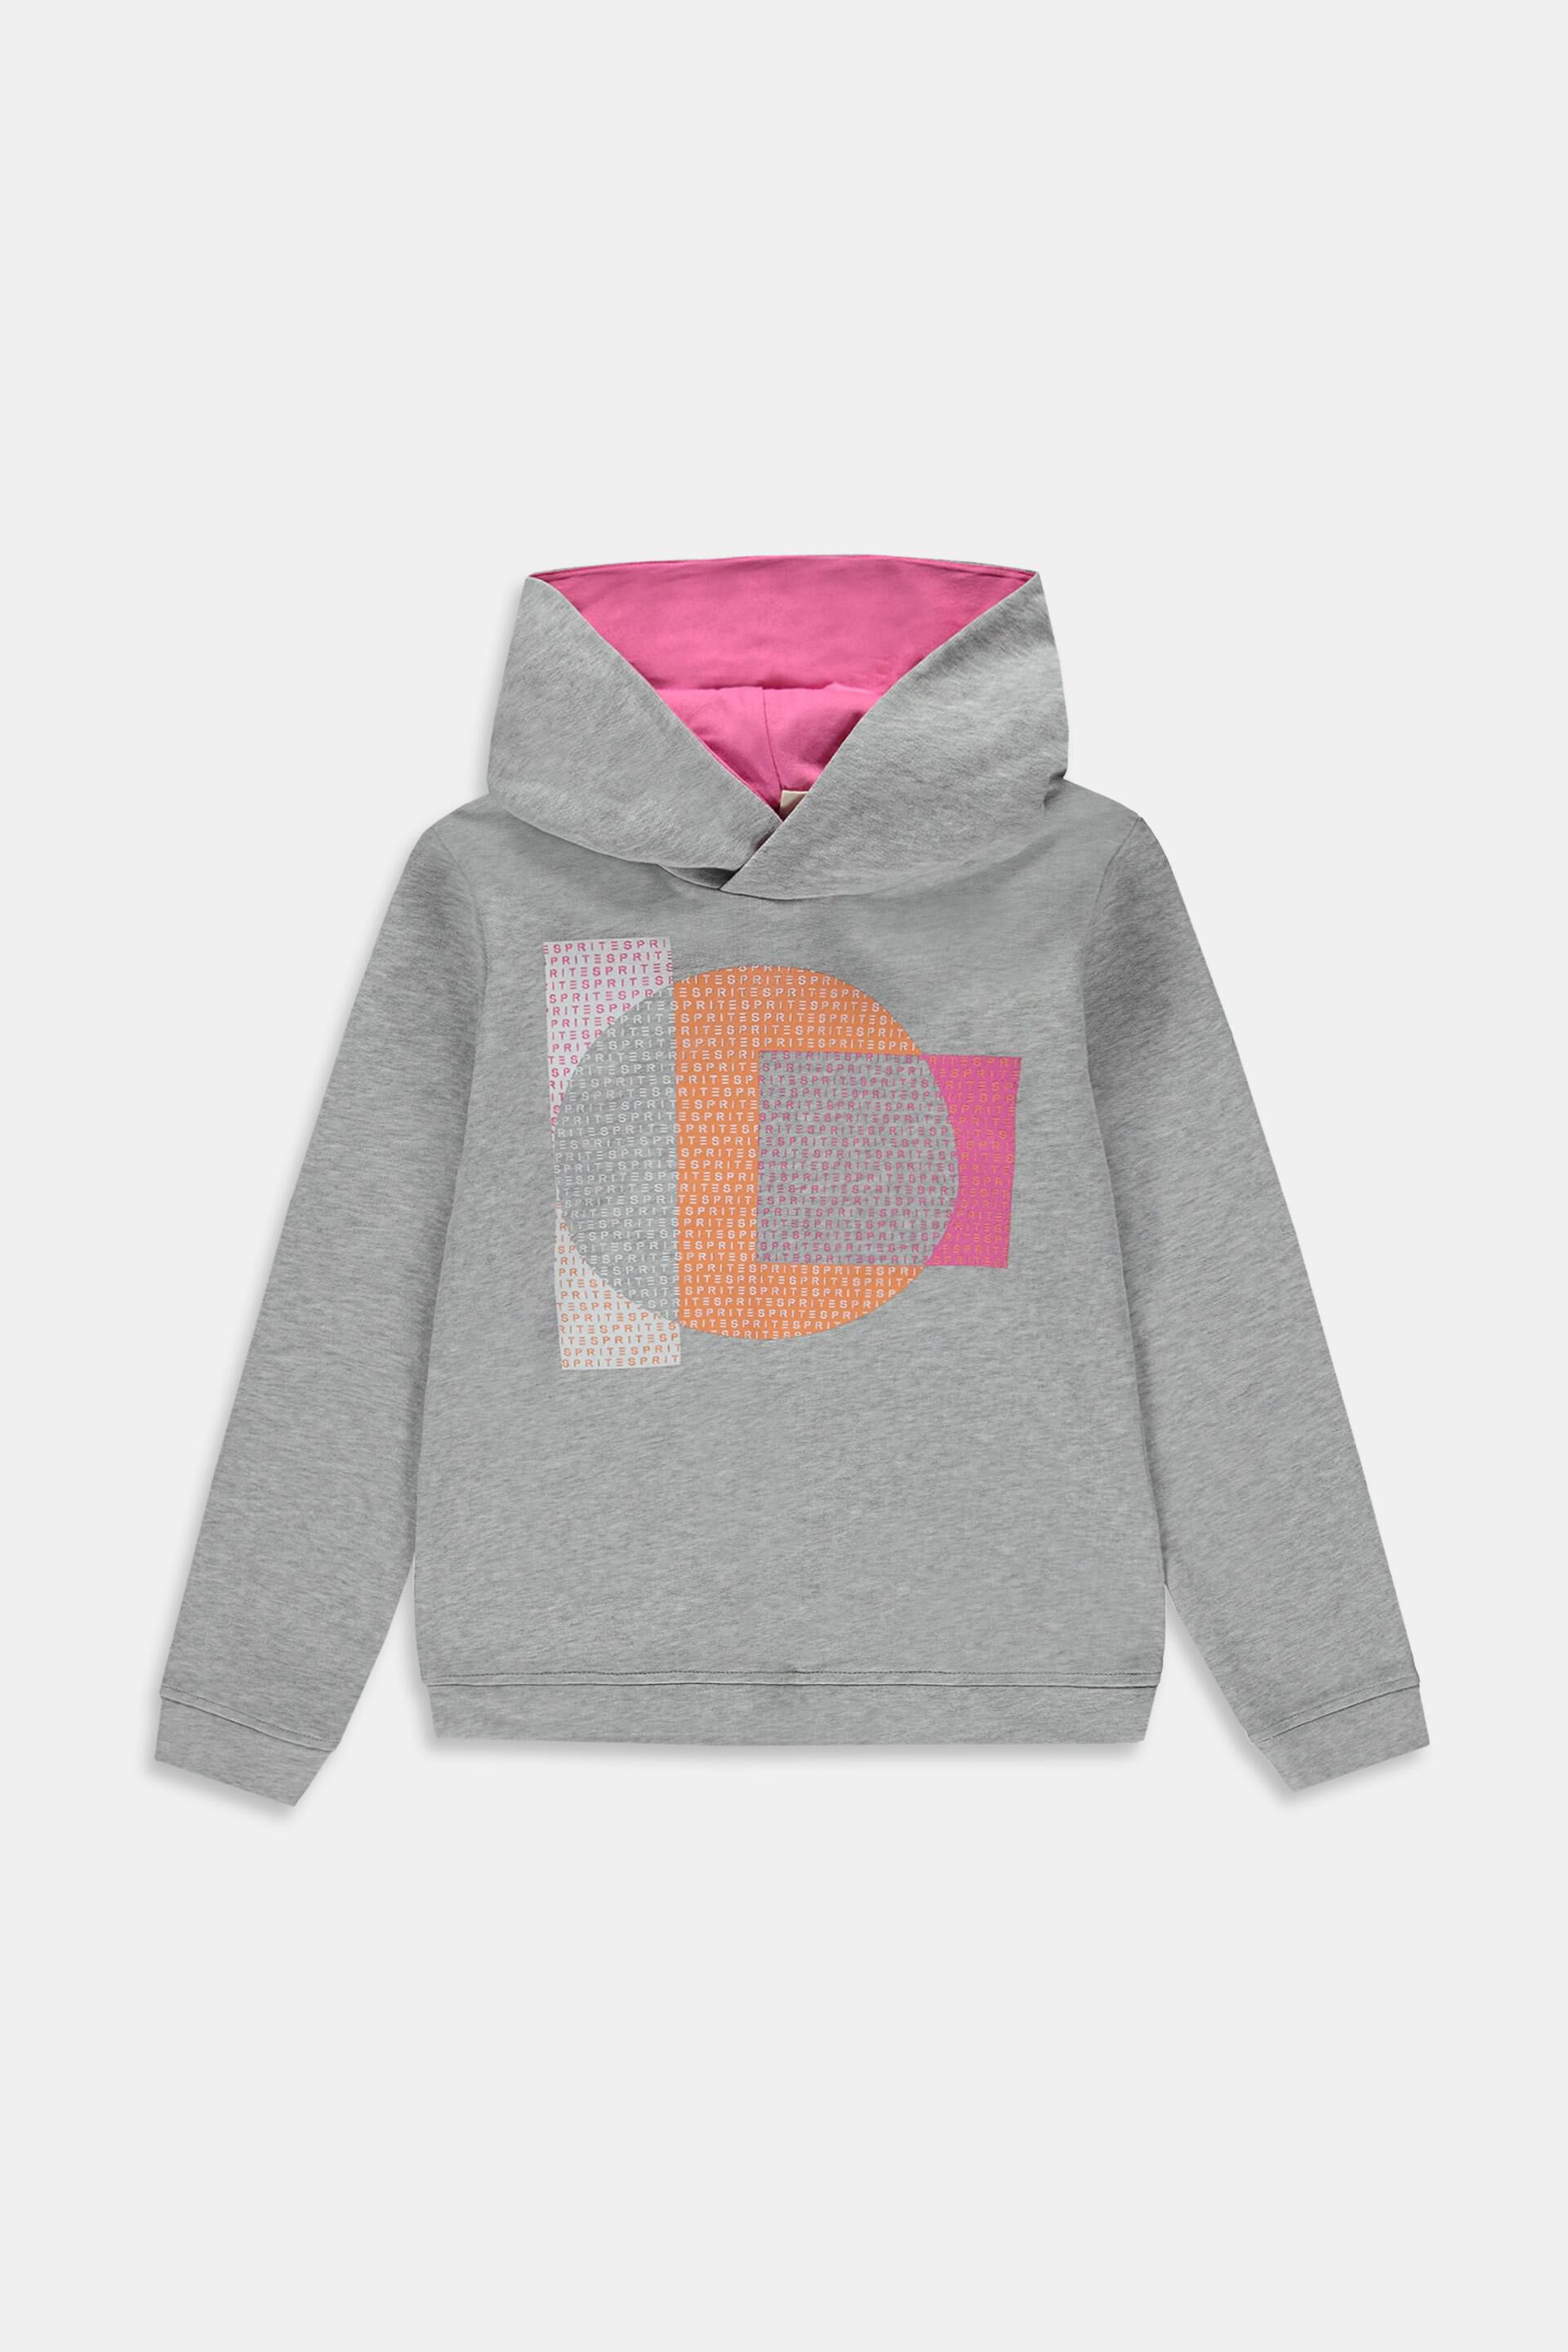 Esprit chest on Cotton with hoodie print geo